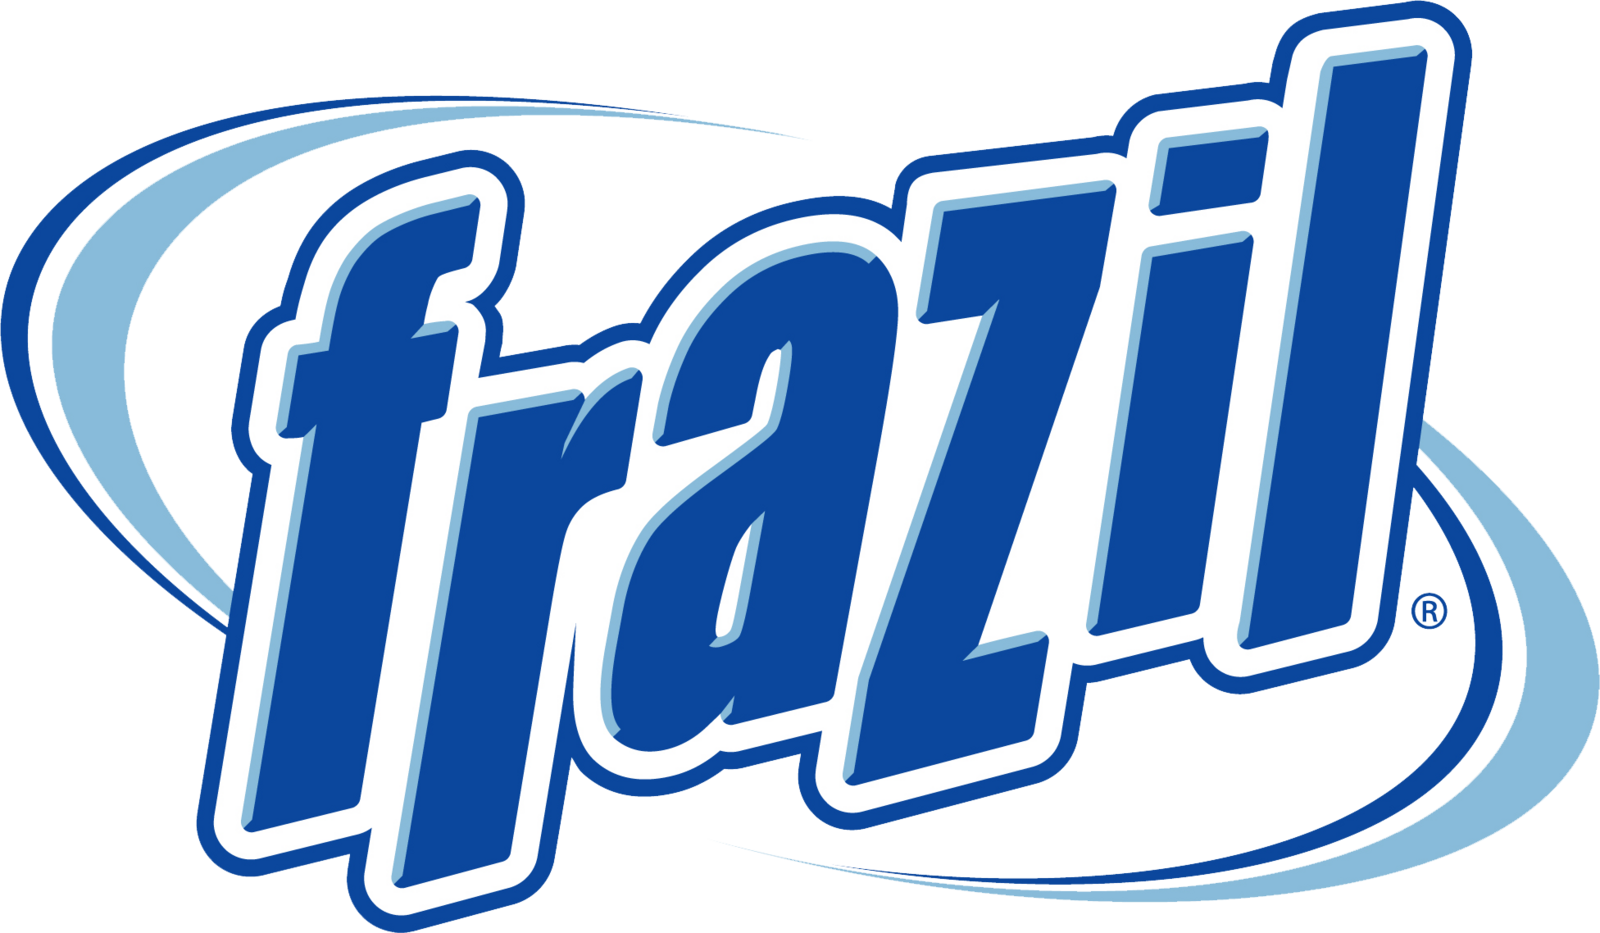 frazil logo large 2